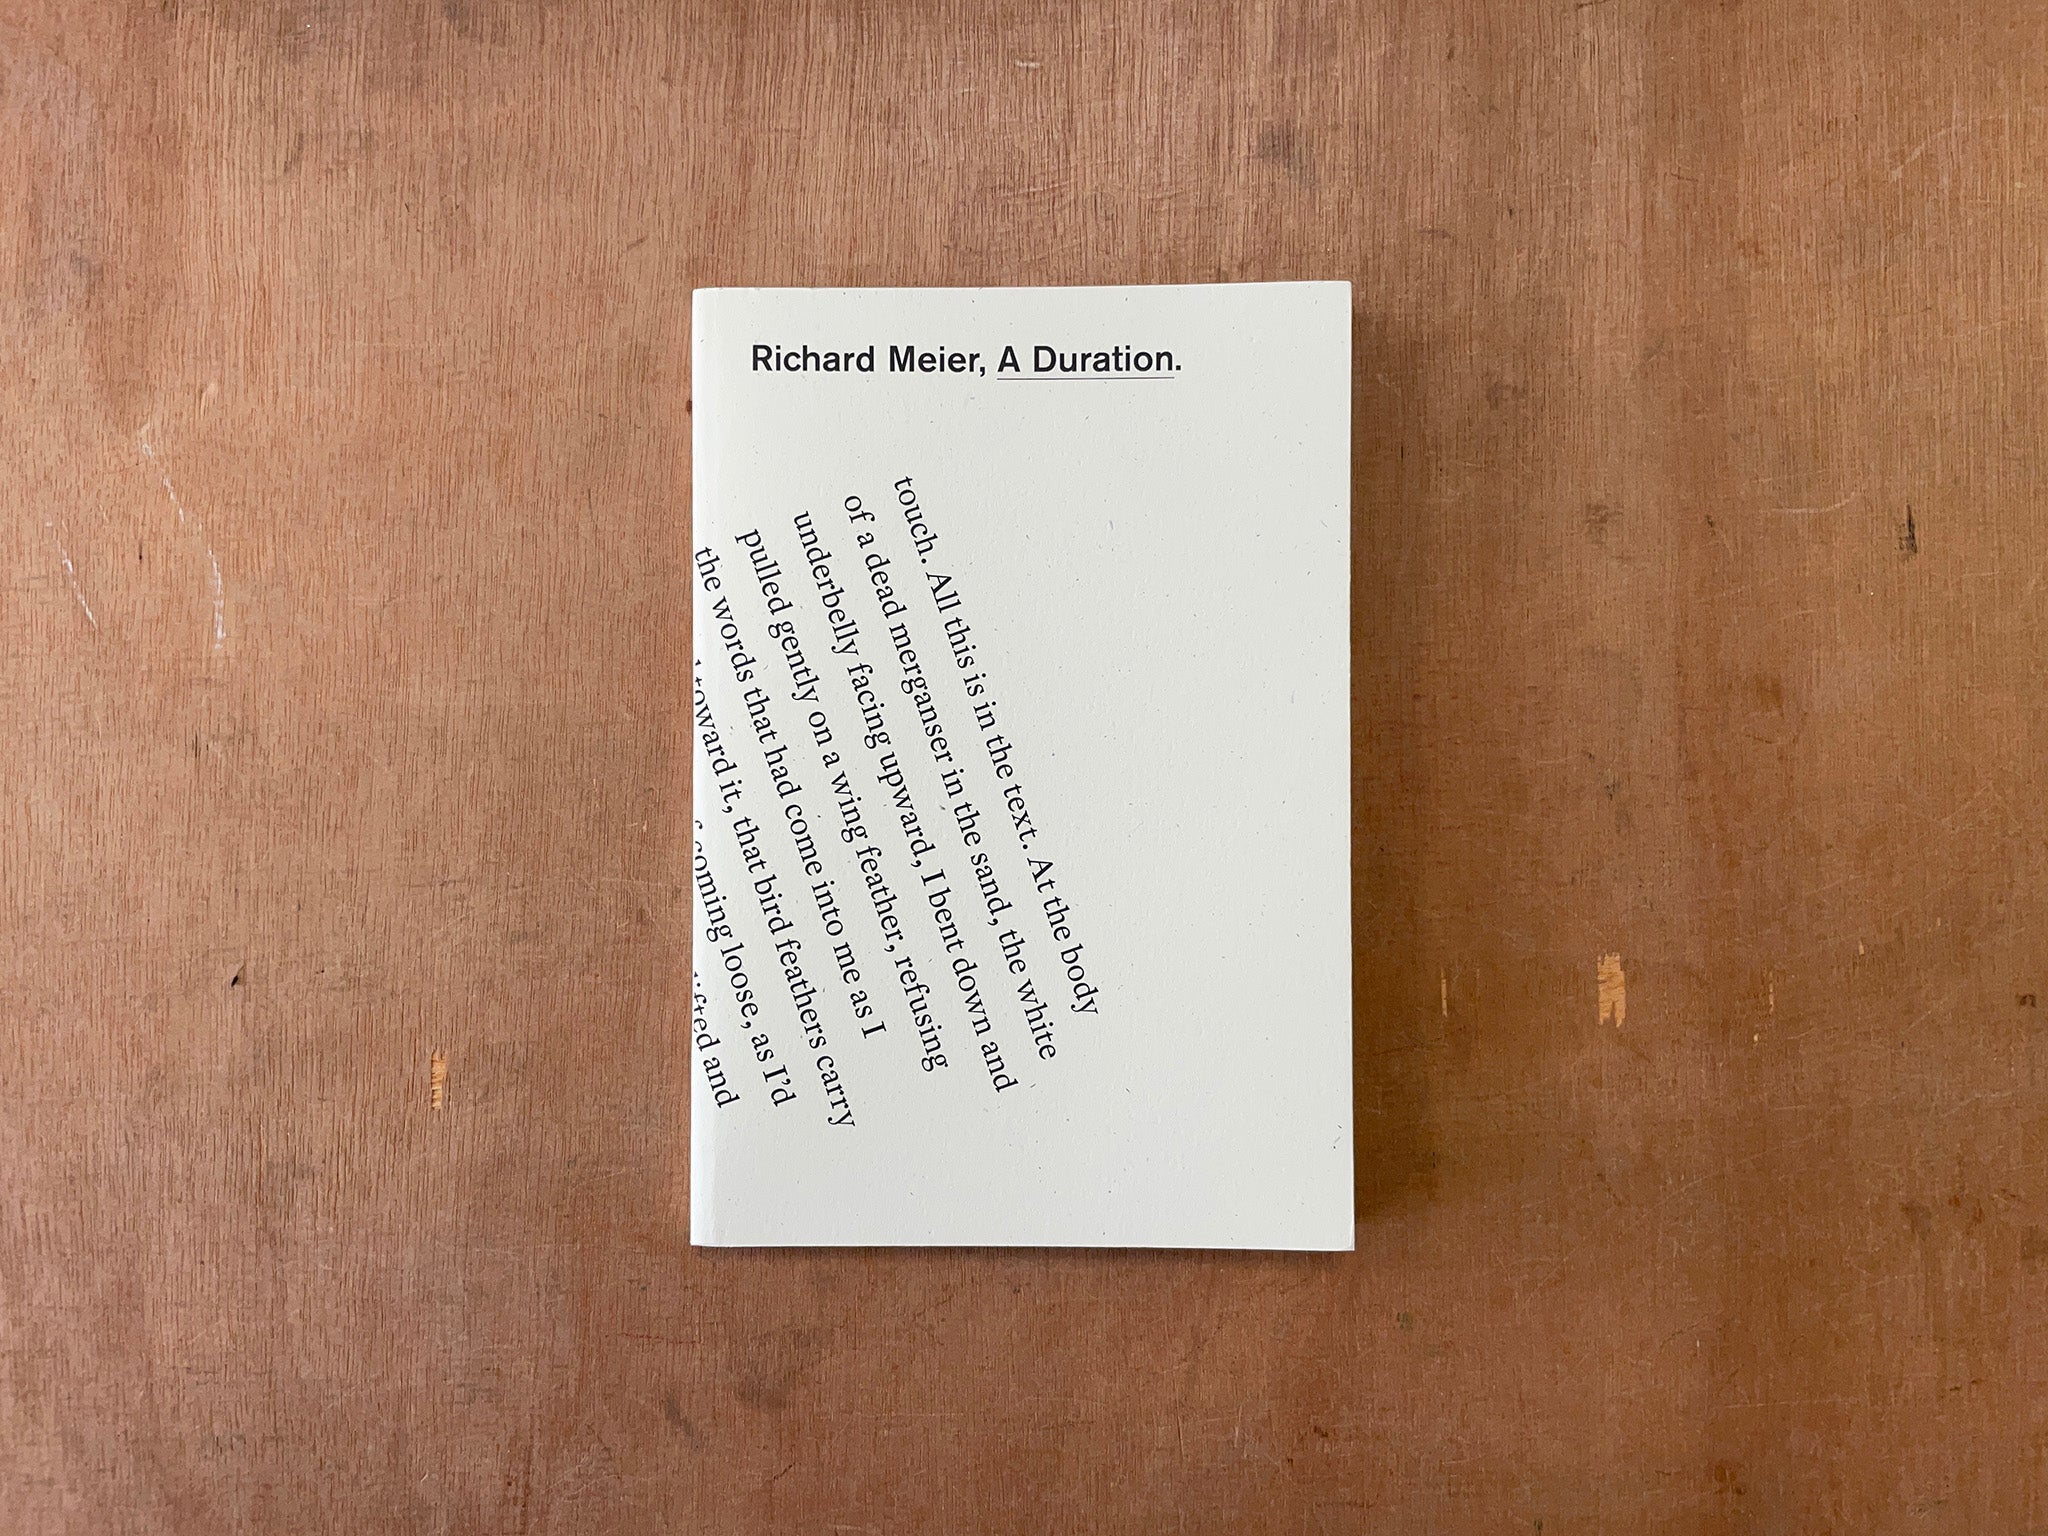 A DURATION by Richard Meier